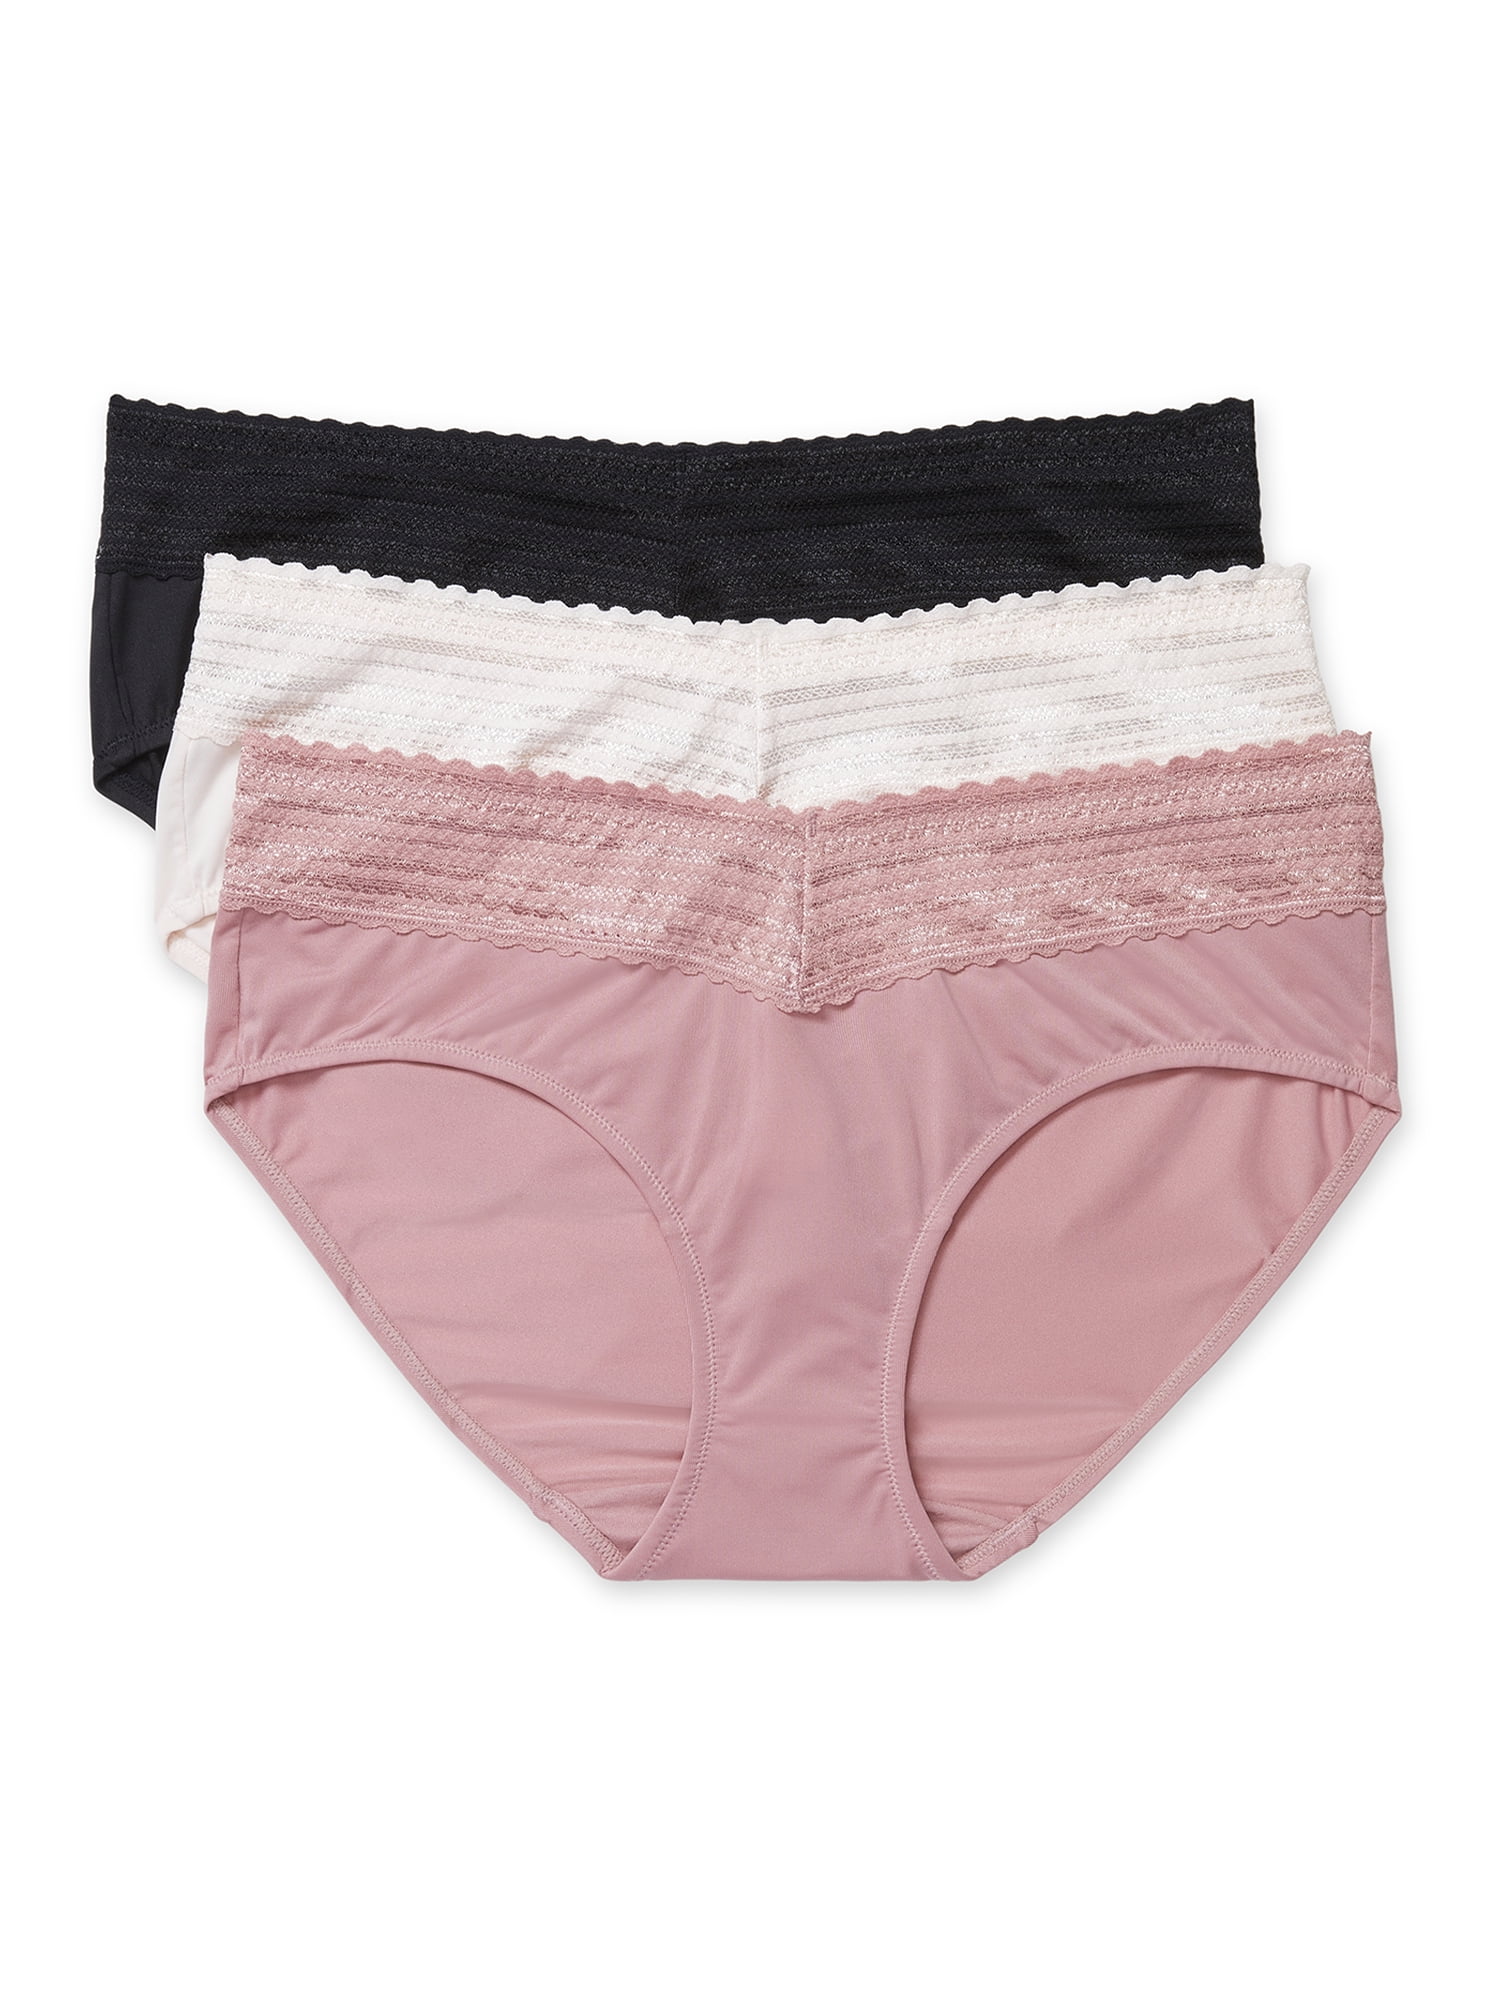 Bulk-buy Ladies Undewear Microfiber with Pretty Lace Panty price